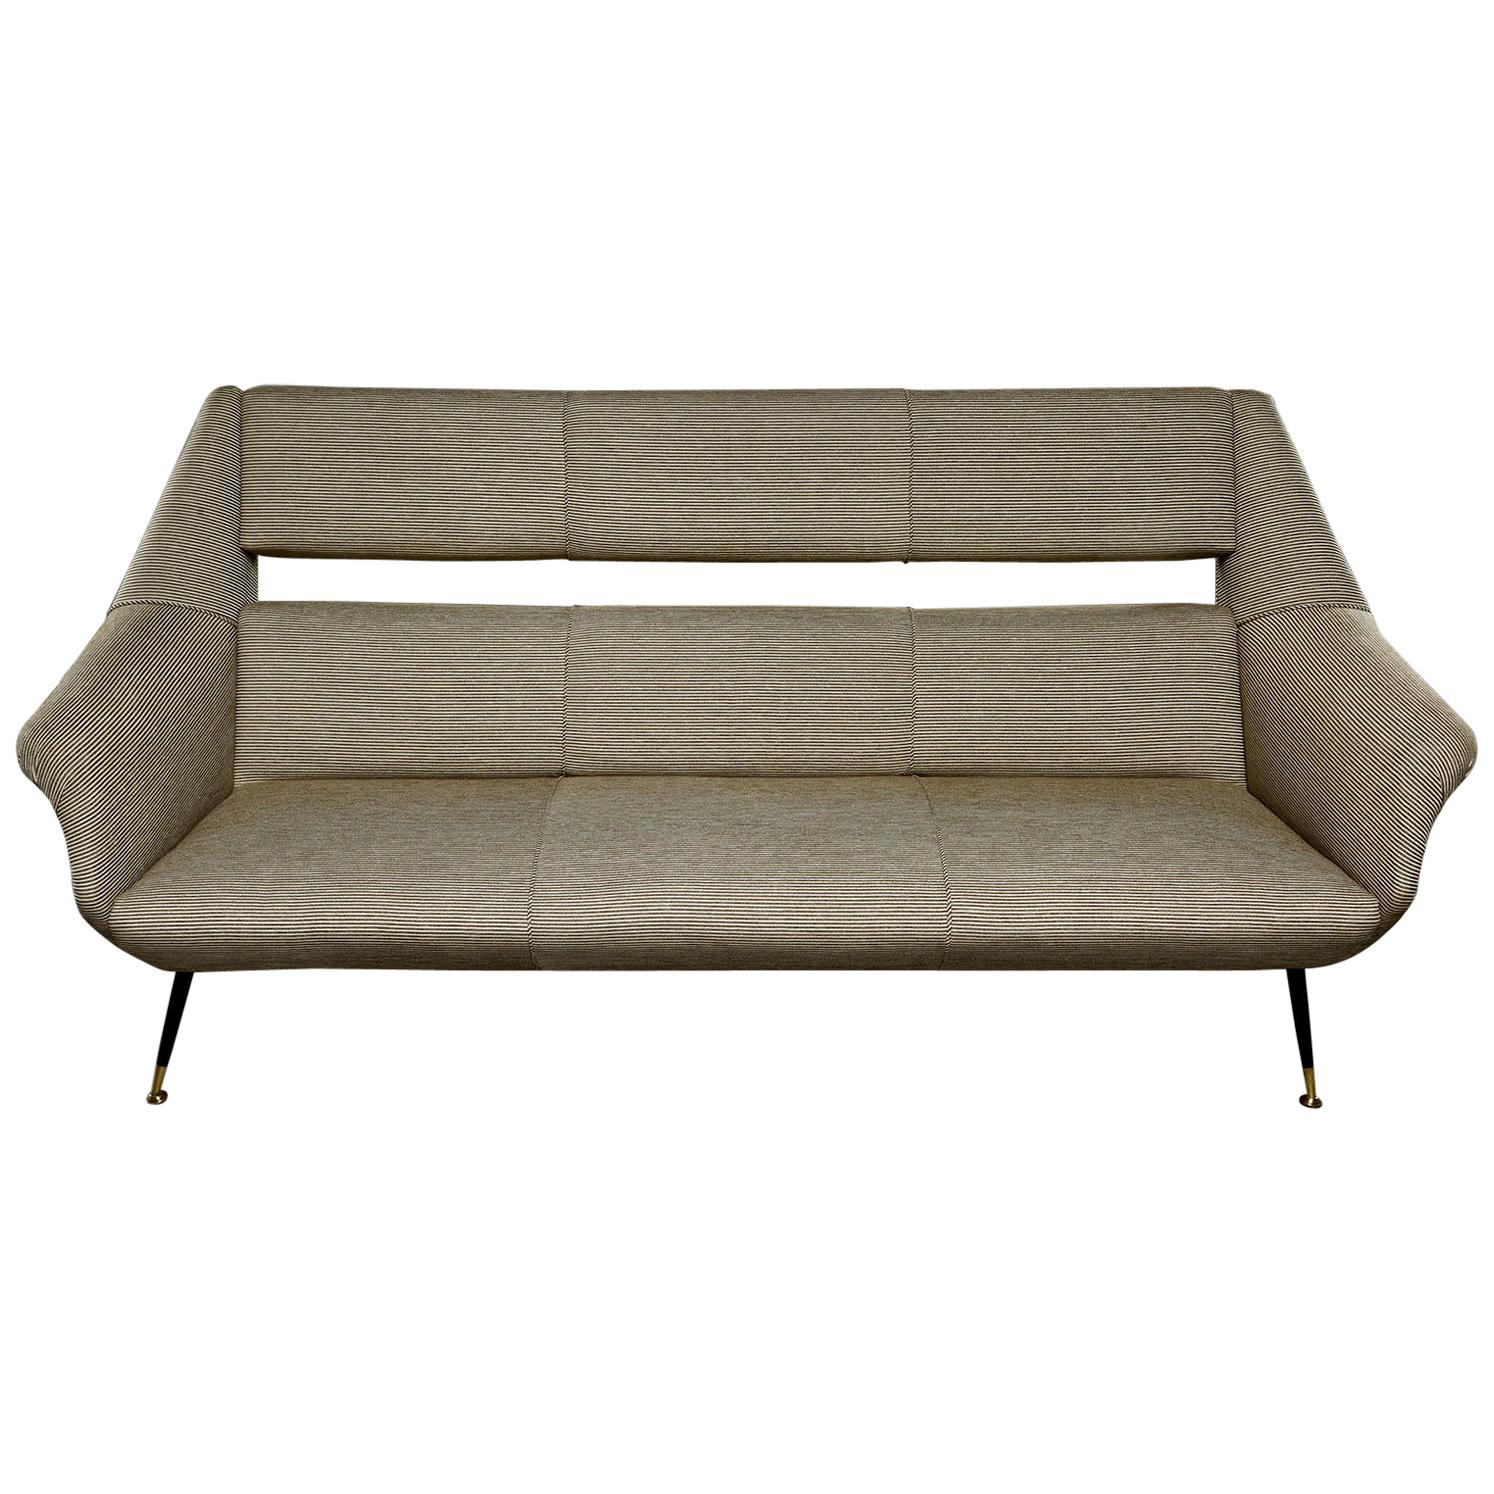 Newly Upholstered Midcentury Settee or Sofa by Gigi Radice for Minotti